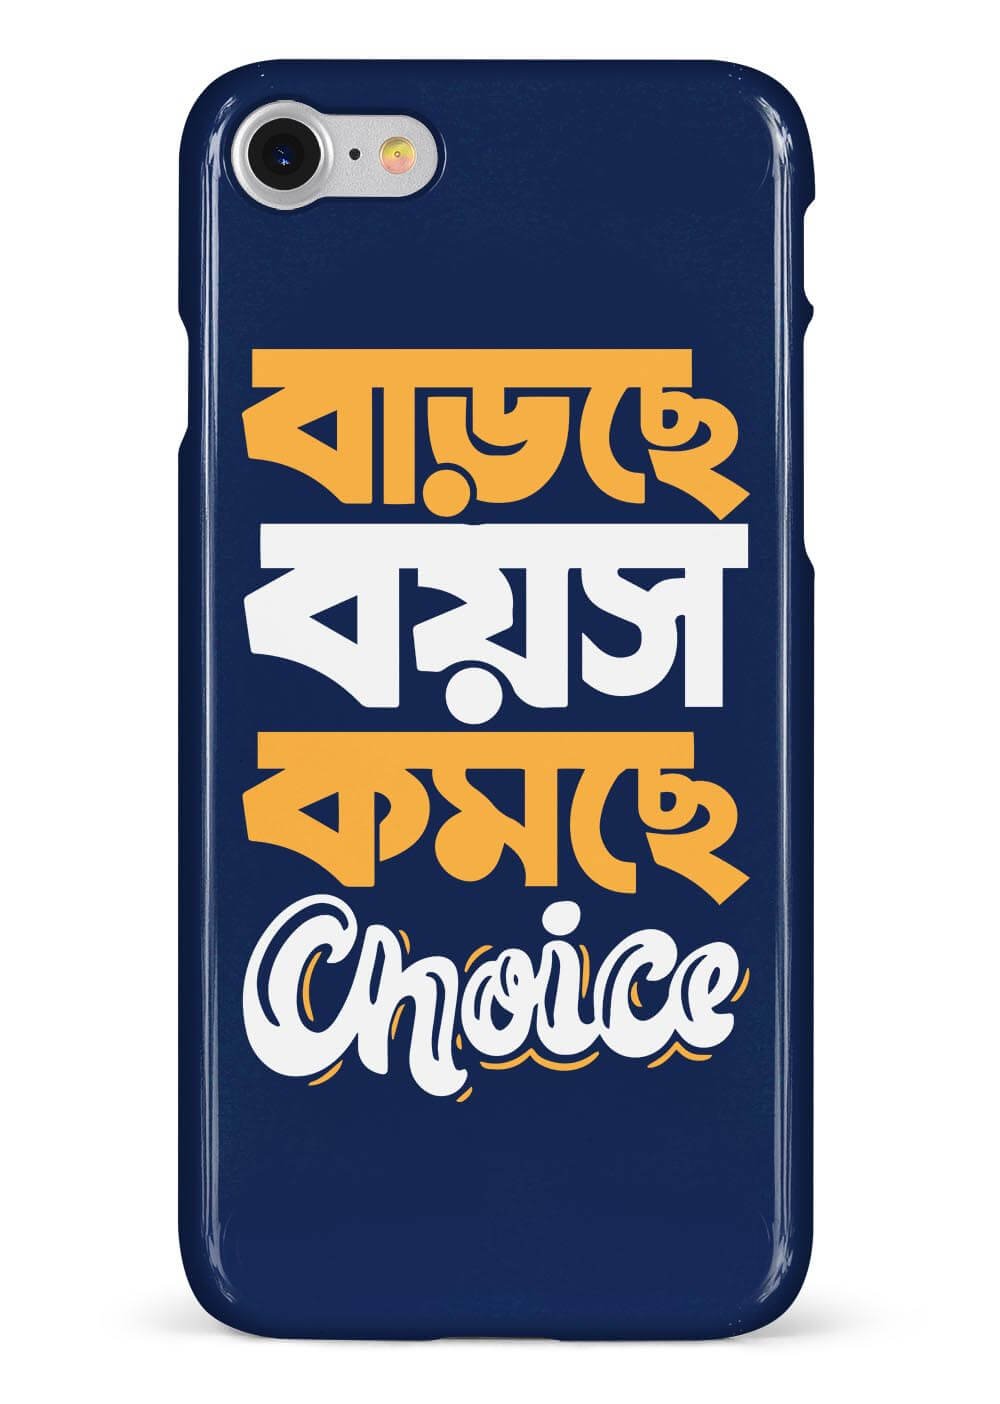 Barche boyesh komche choice Mobile Cover